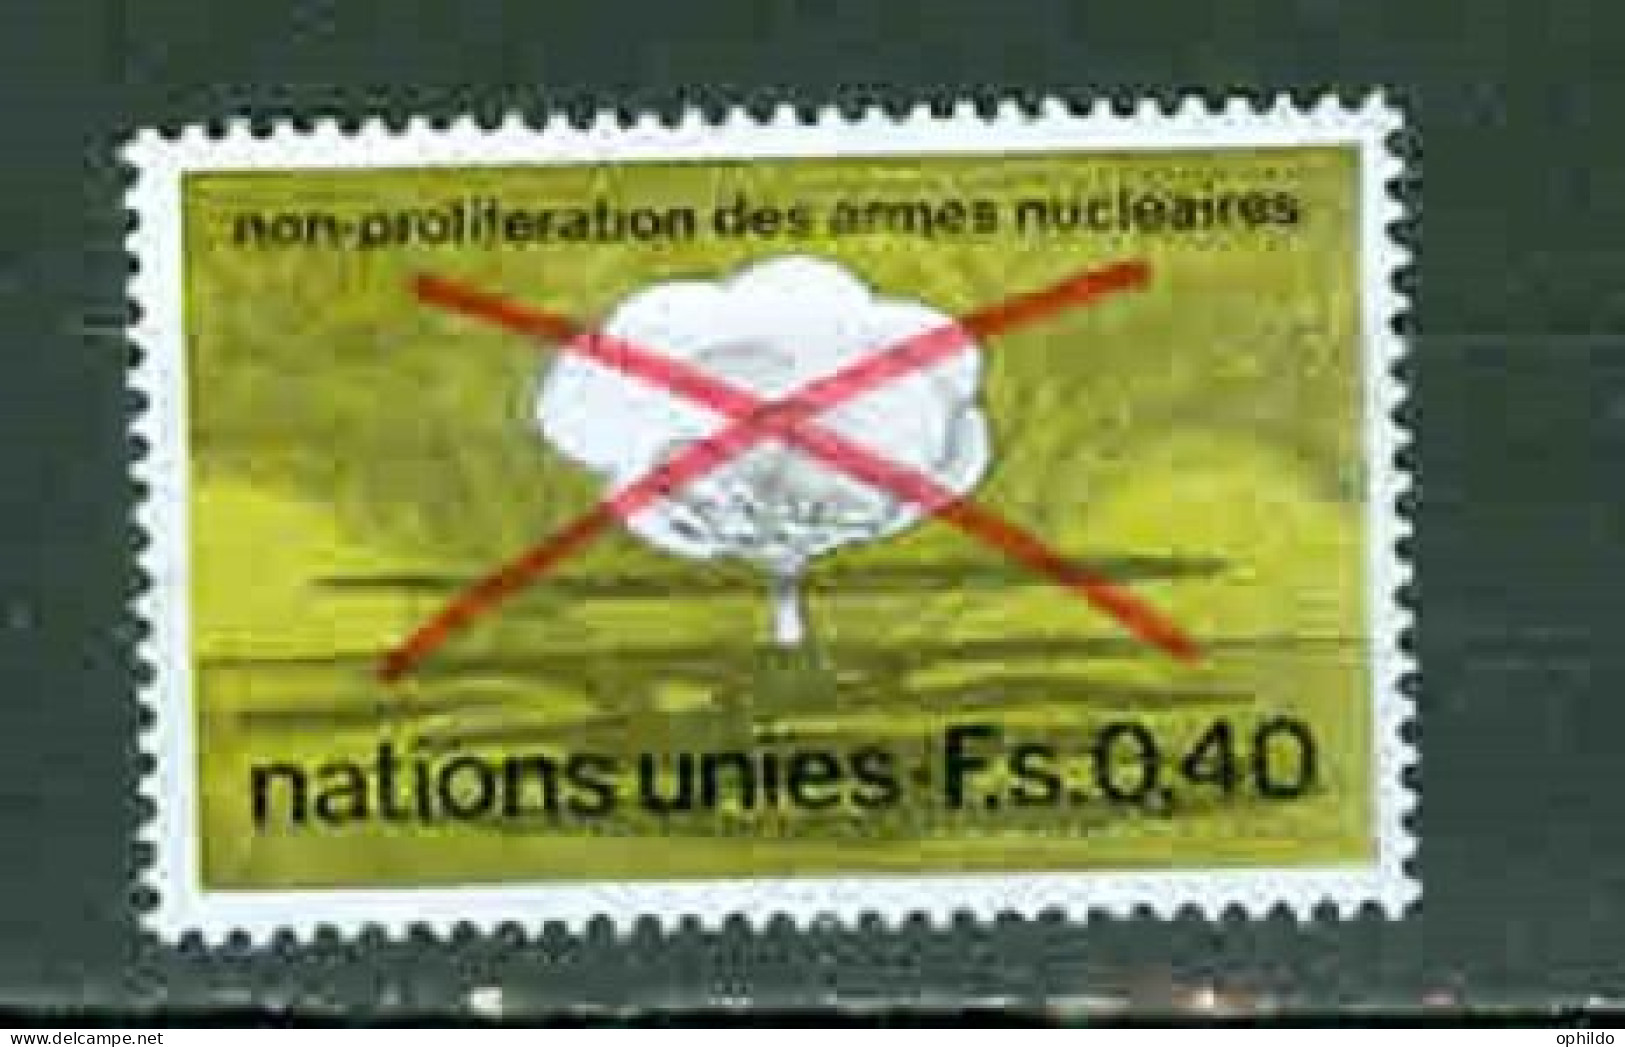 Nations Unies  Genève   23  * *  TB    - Unused Stamps